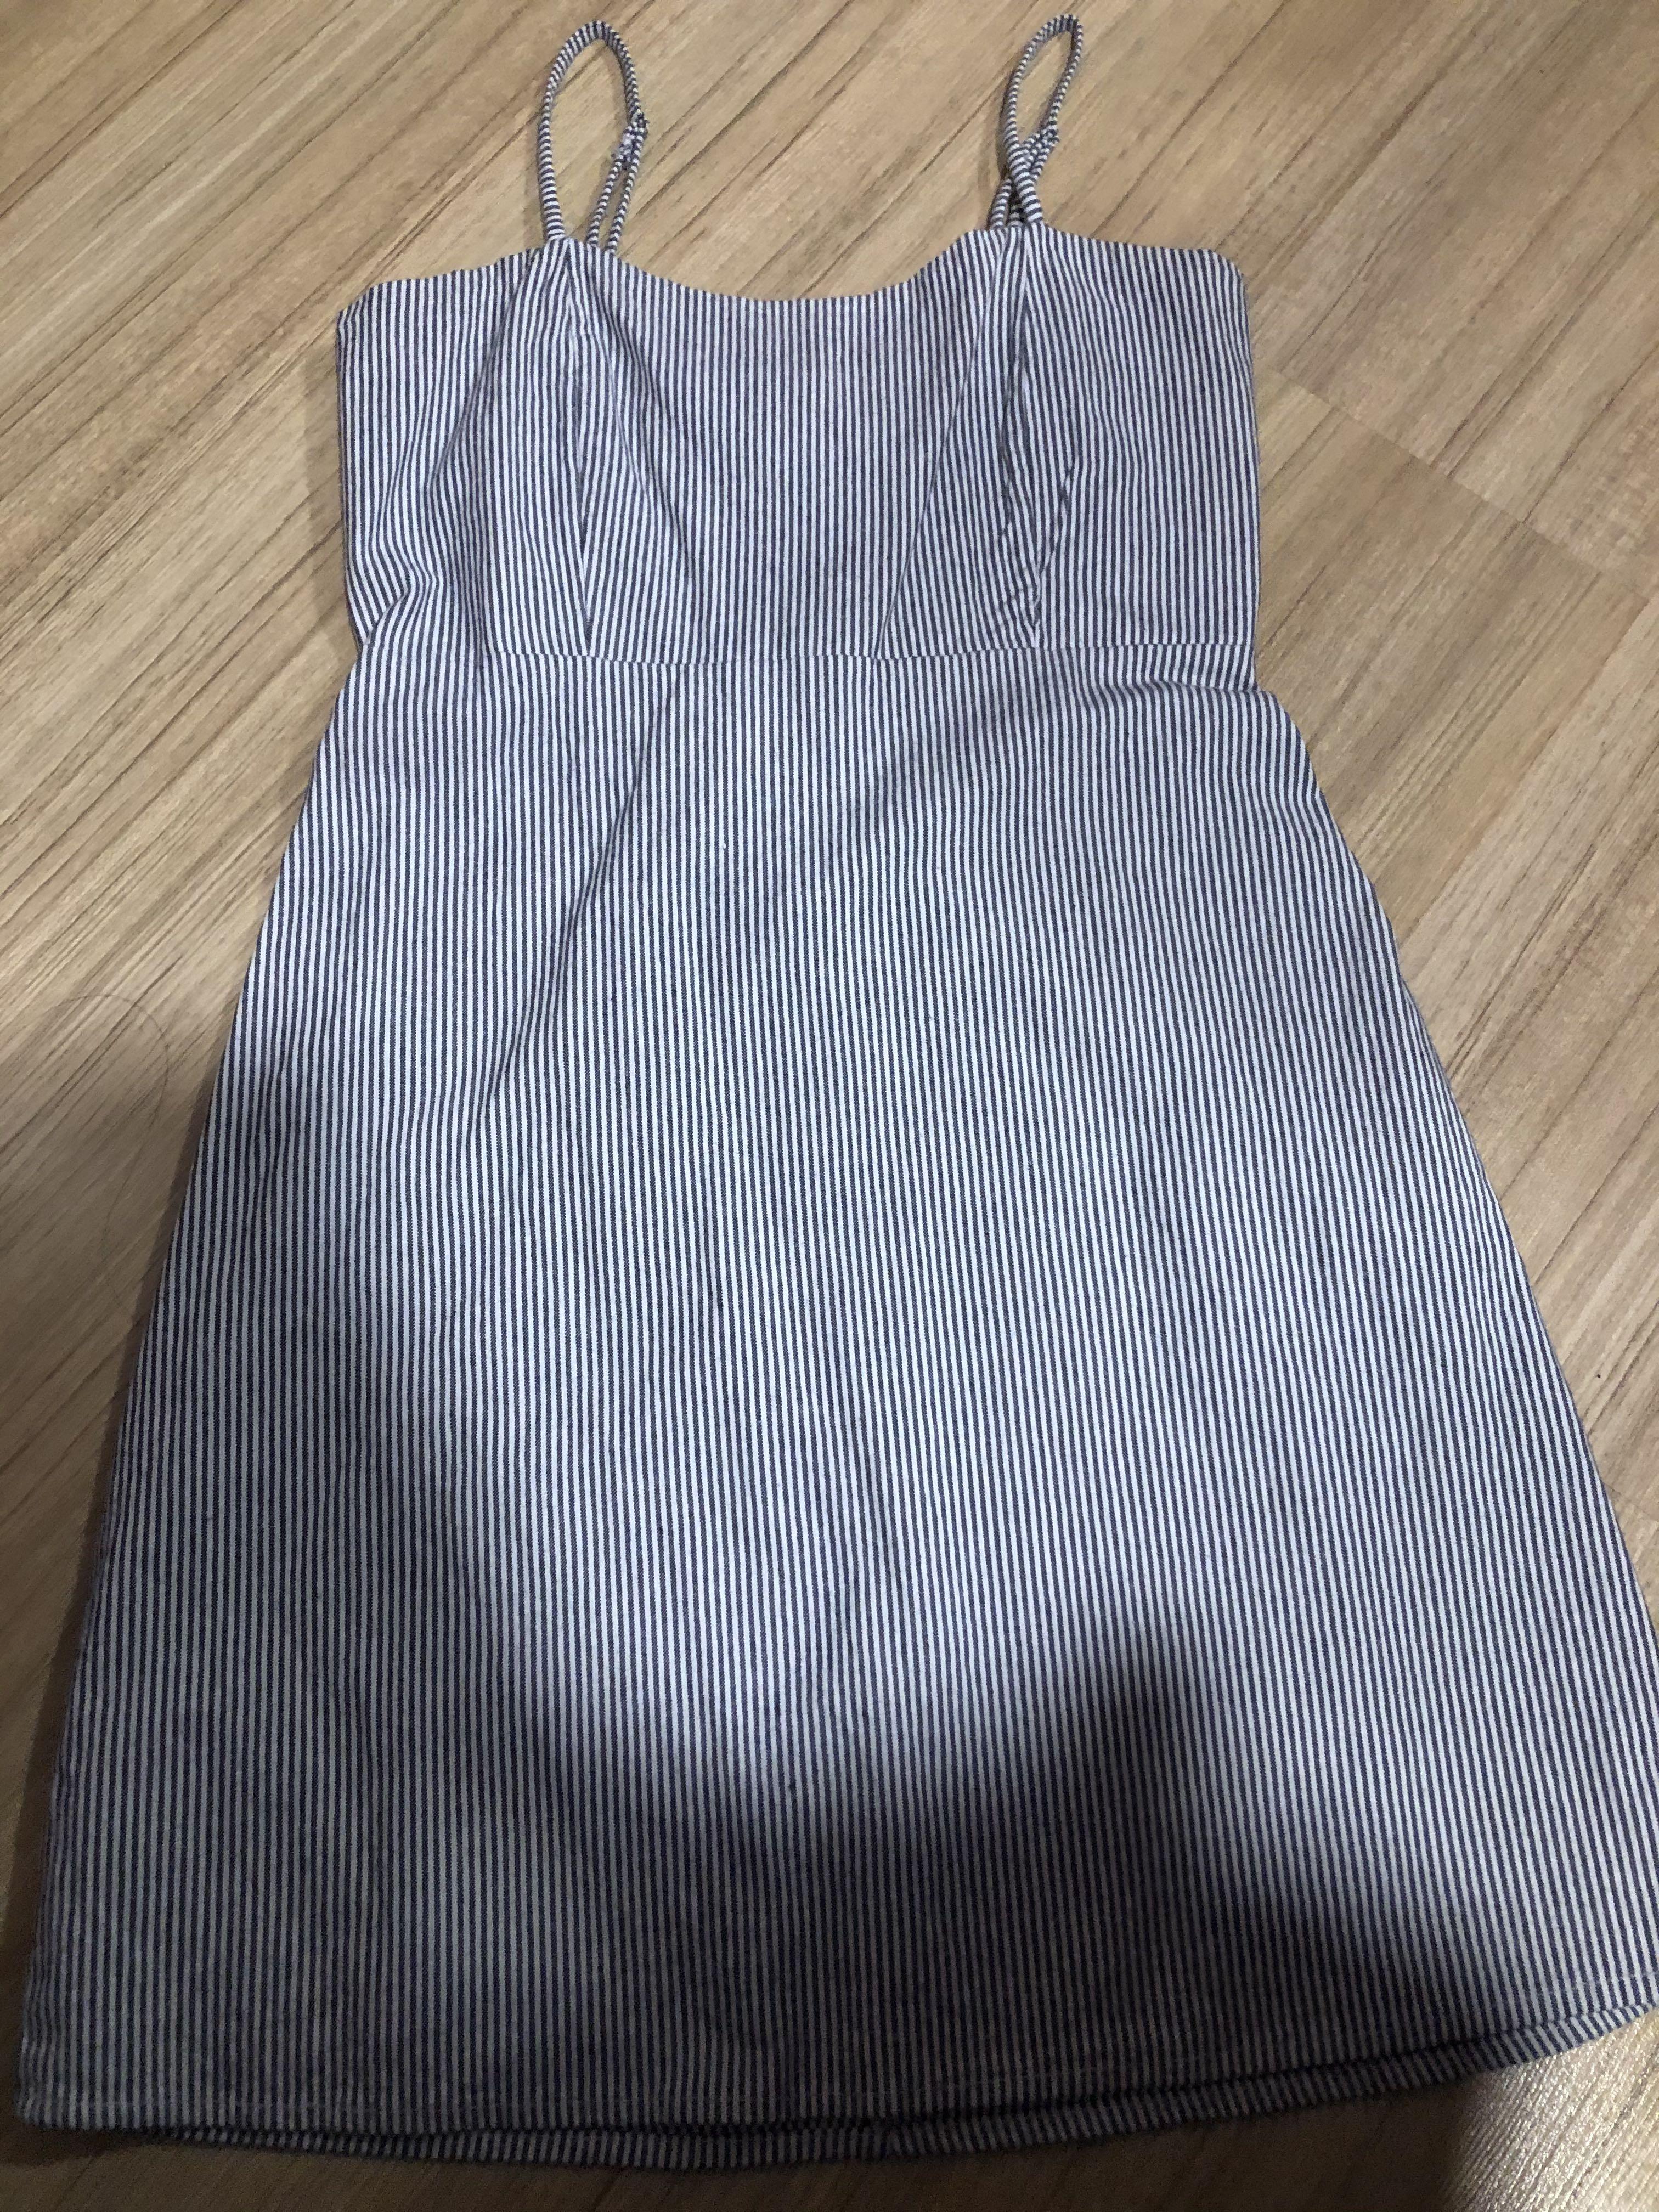 BRANDY MELVILLE Blue White Stripe Karla Dress OS